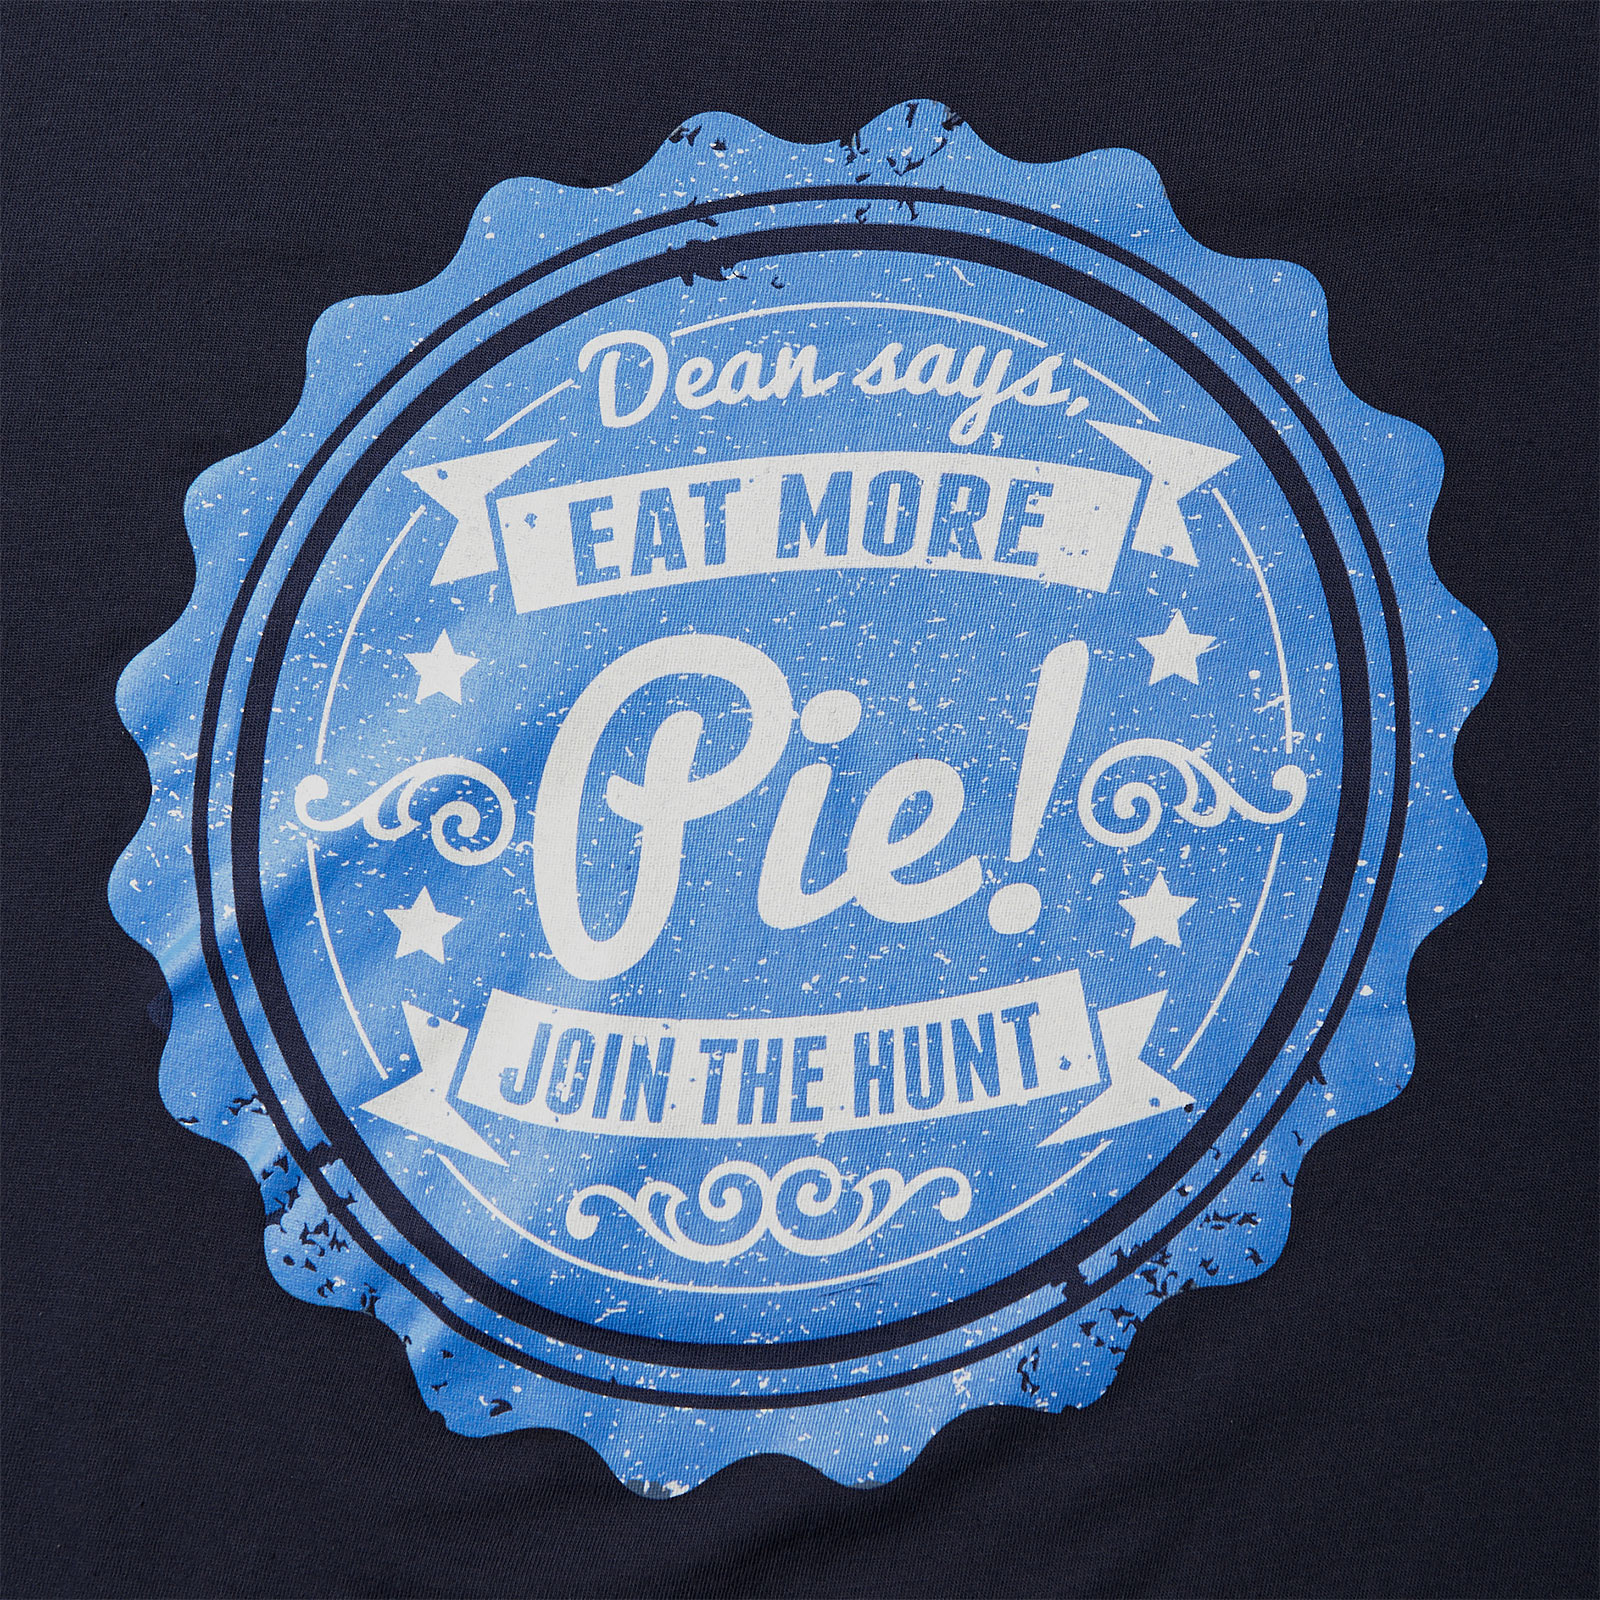 Supernatural - Eat More Pie T-Shirt blue